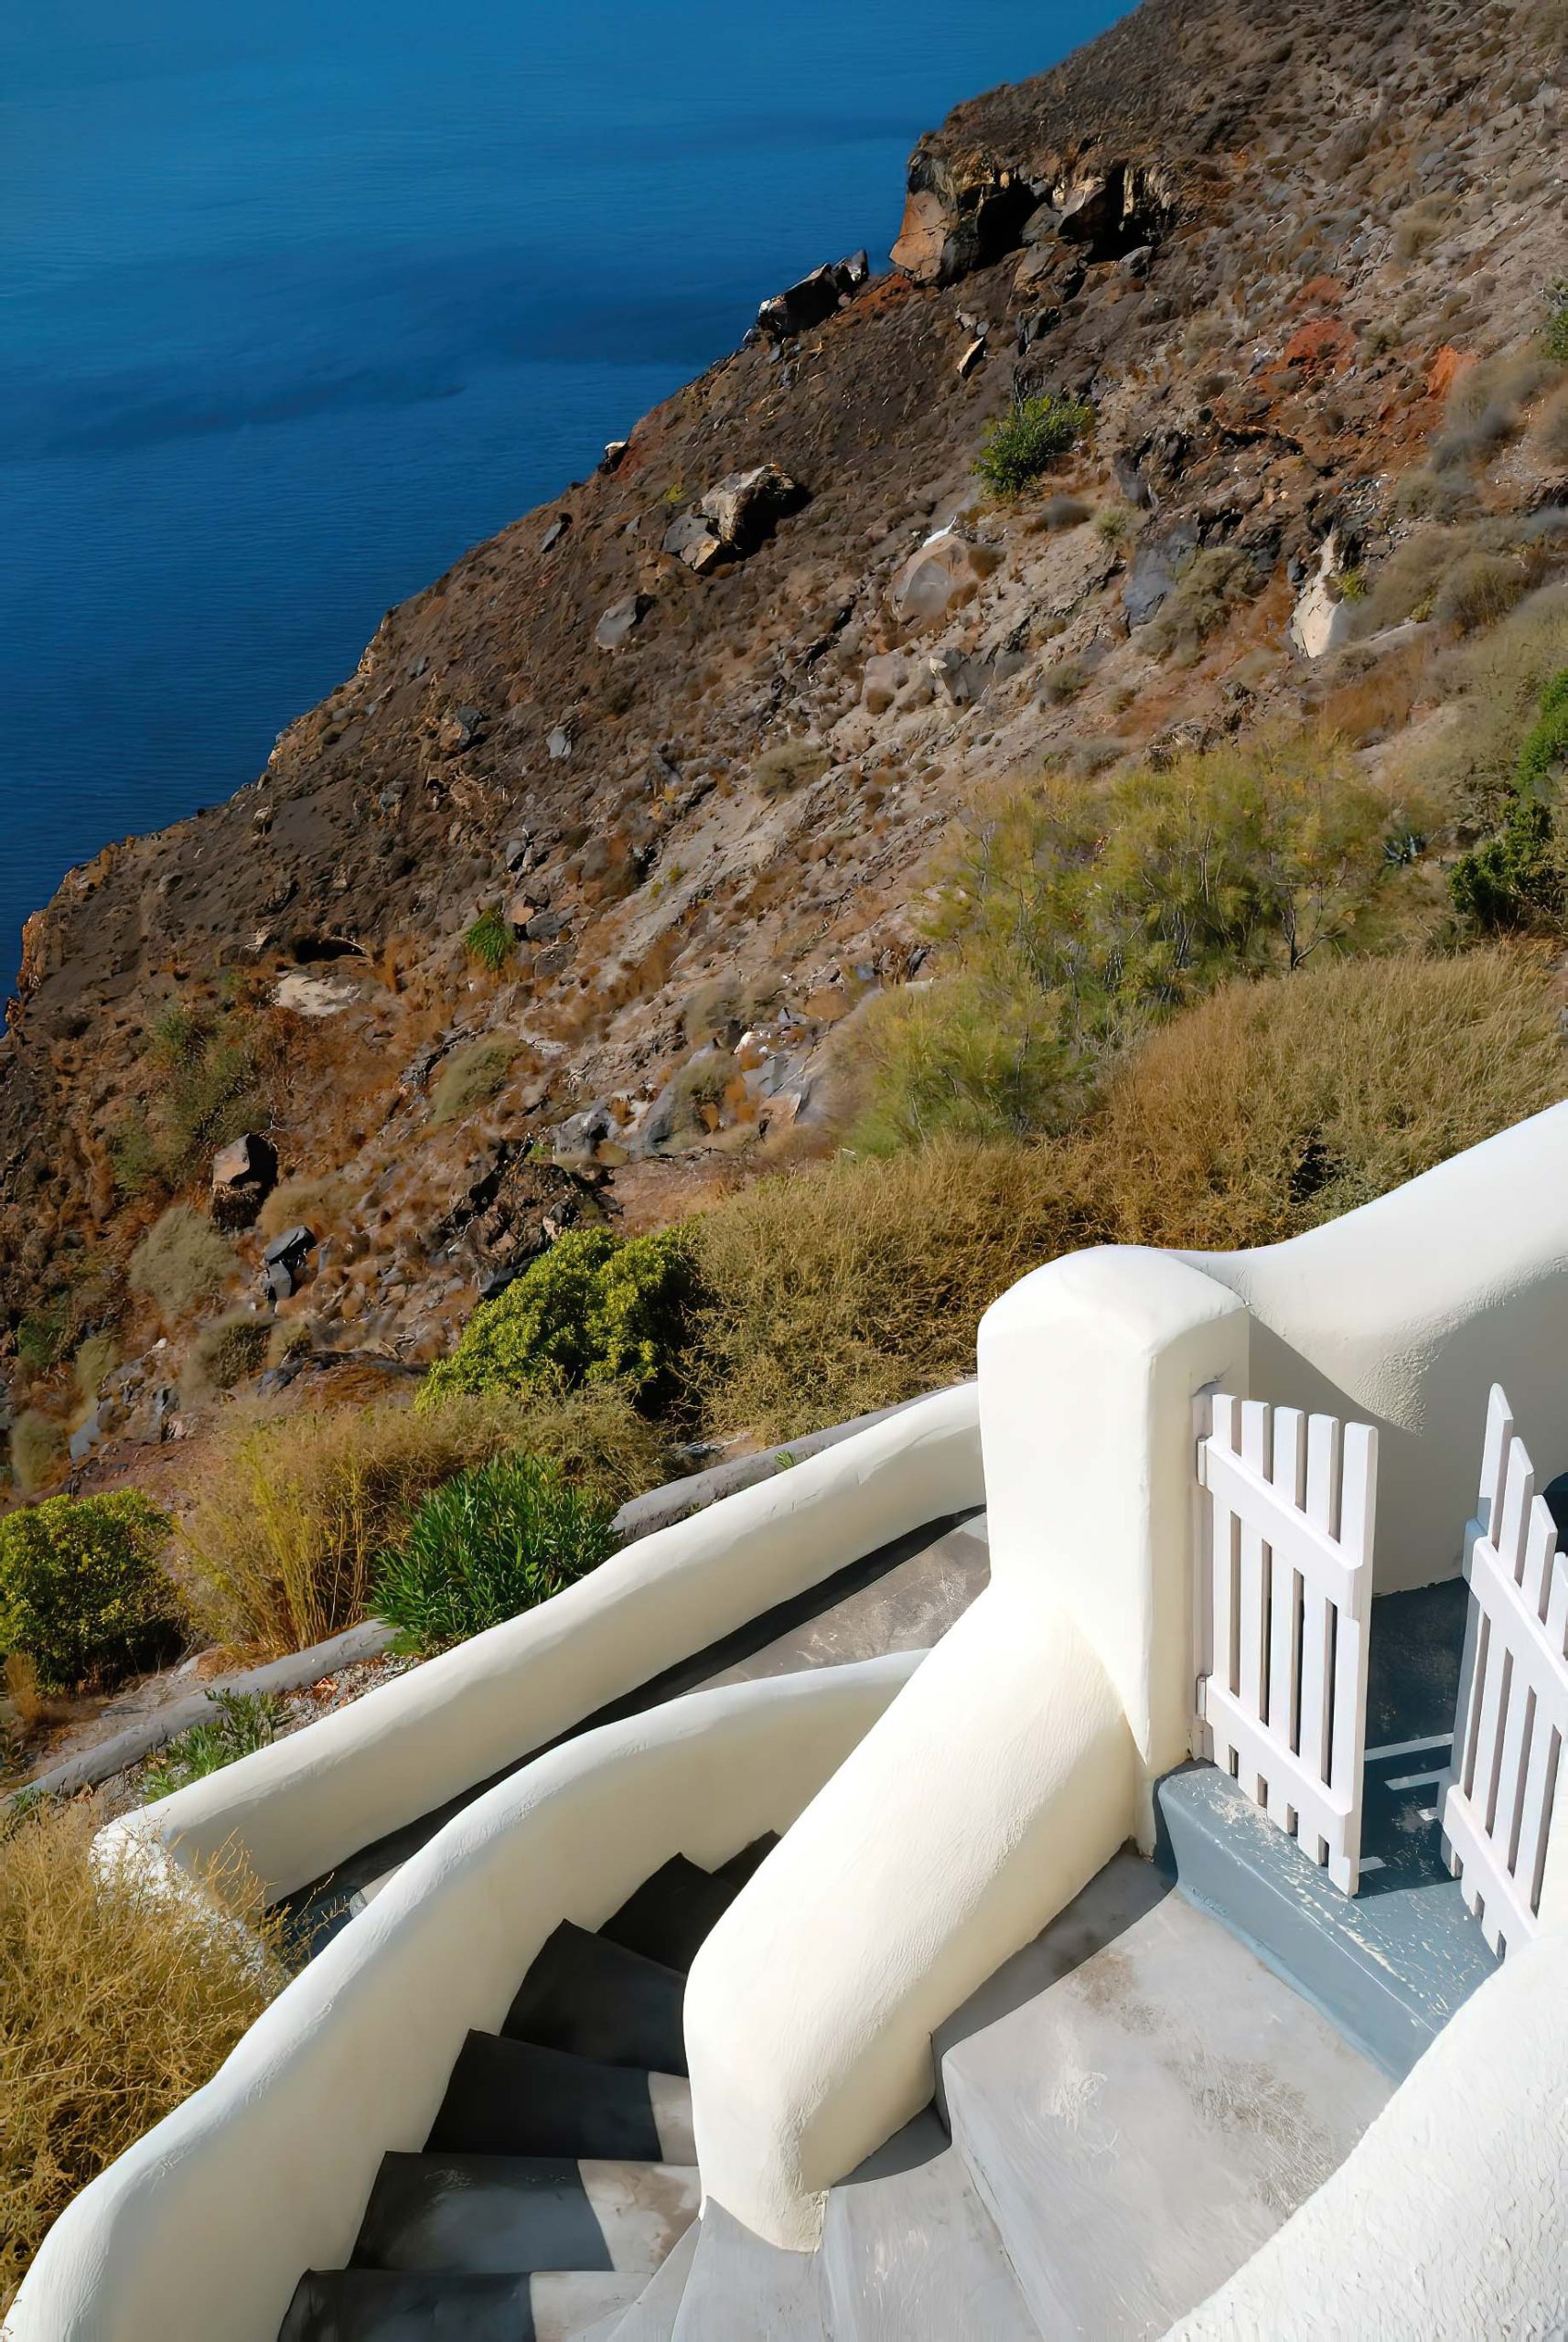 Mystique Hotel Santorini – Oia, Santorini Island, Greece - Cycladic Architecture Stairs